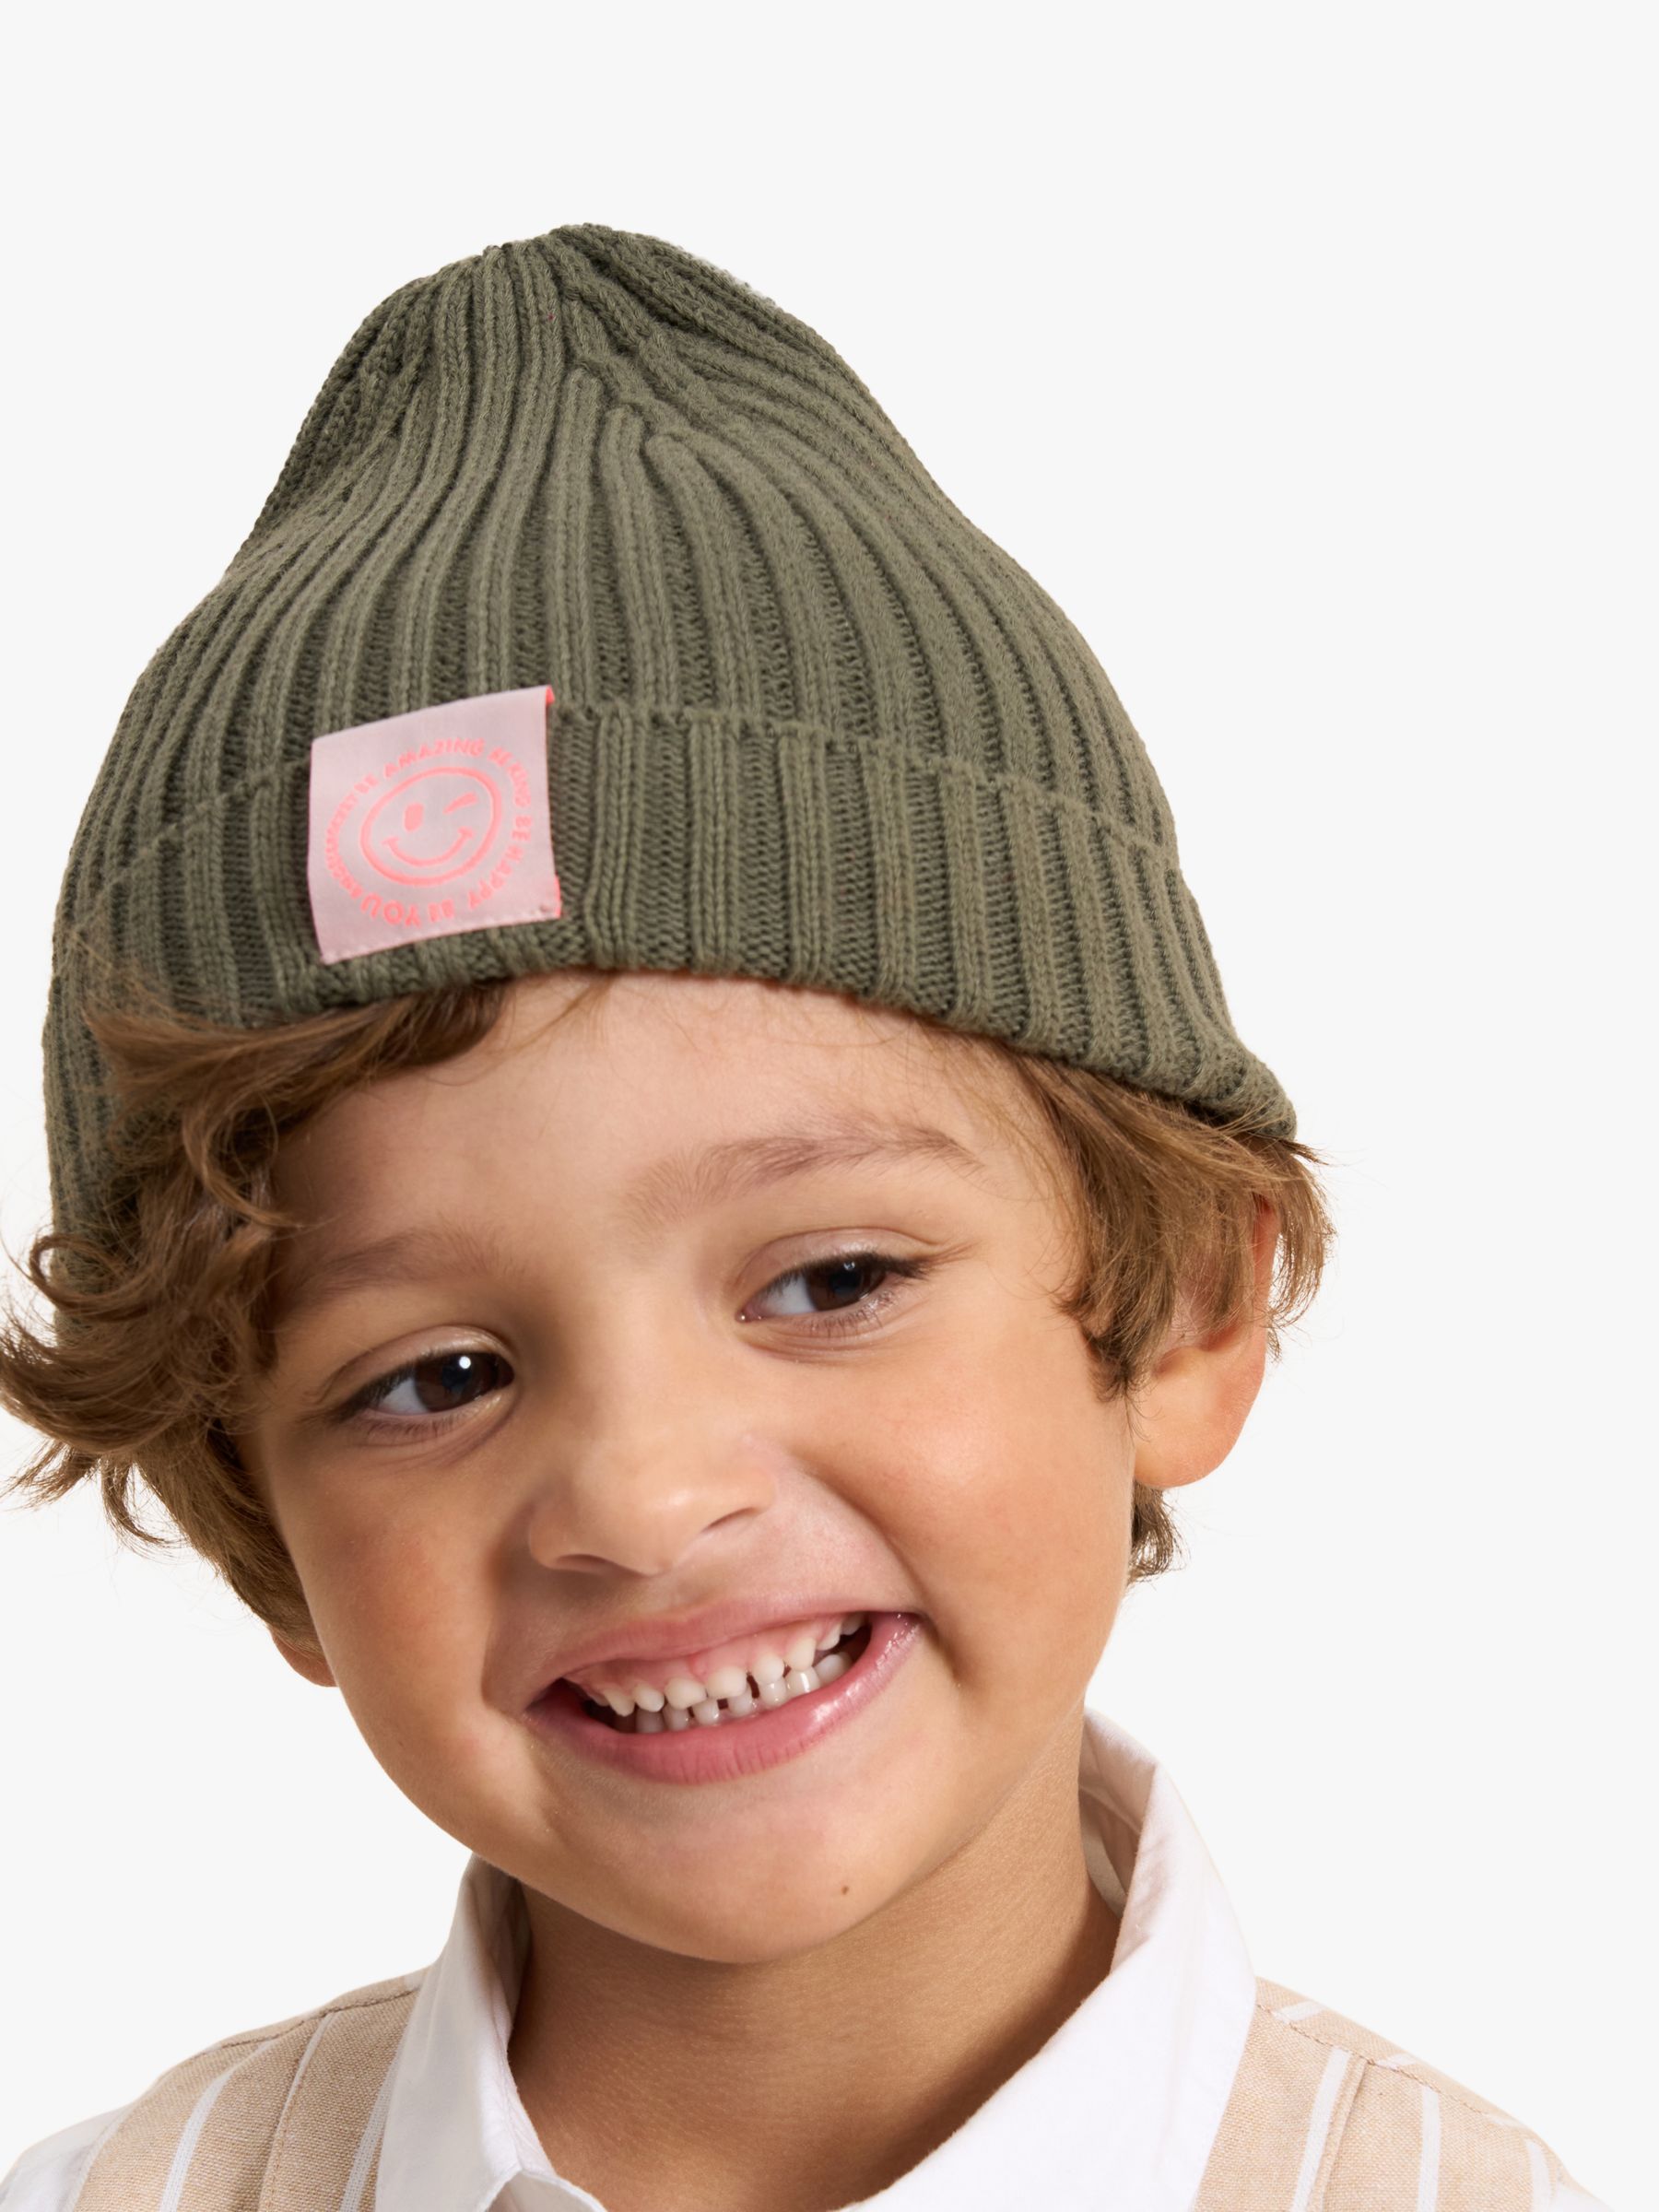 Angel & Rocket Kids' Beanie Hat, Khaki, 3-6 years